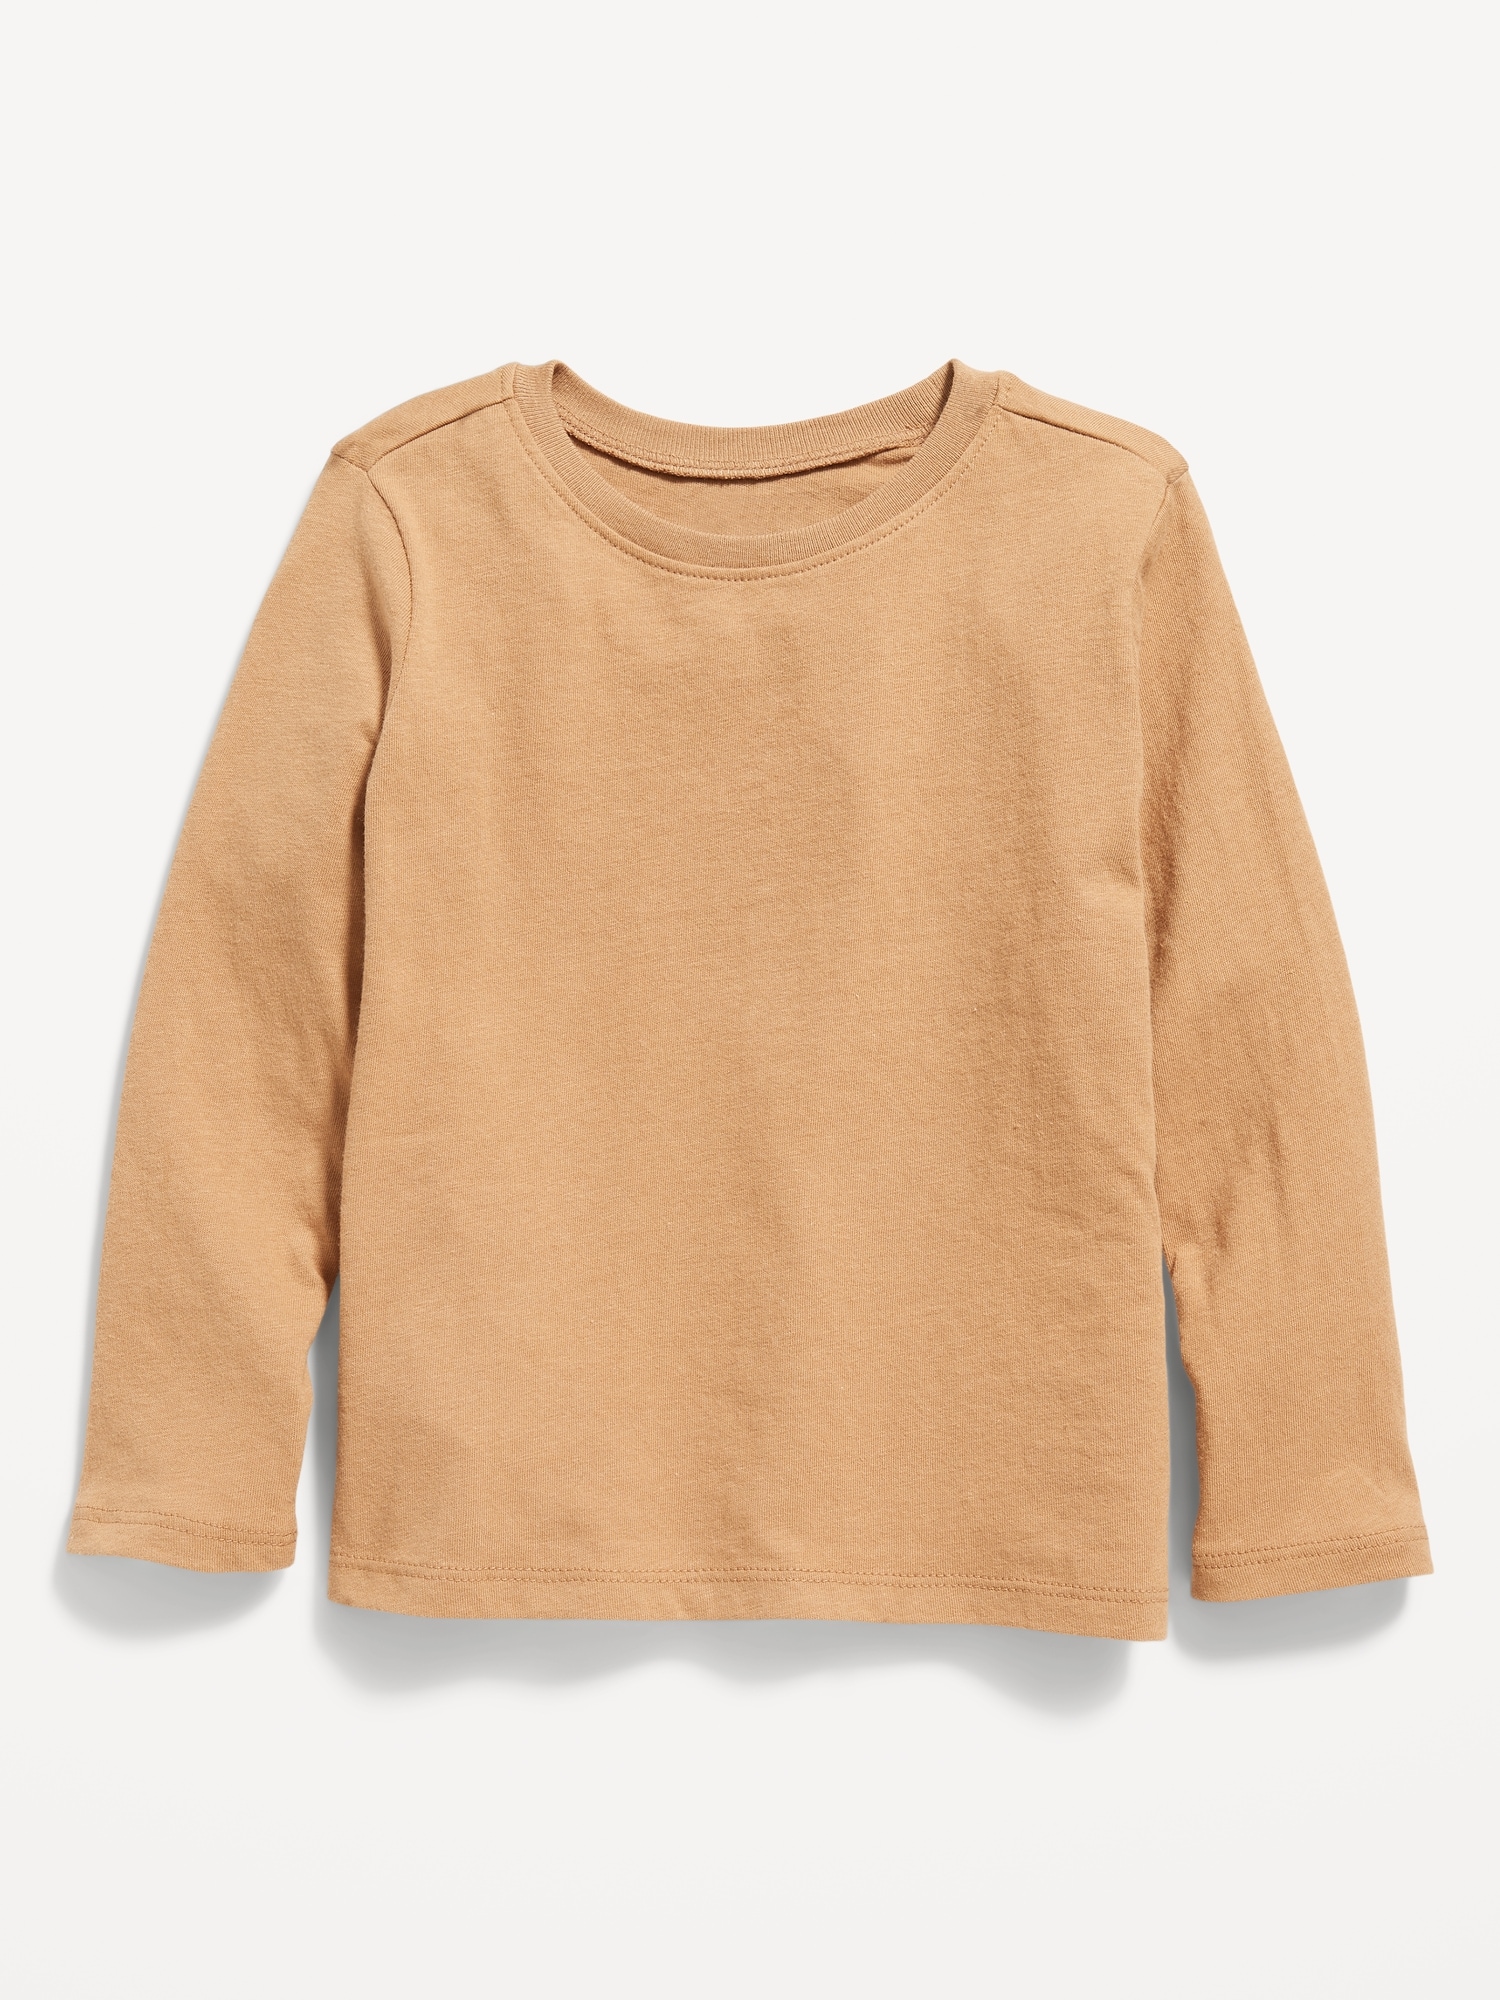 Oldnavy Unisex Long-Sleeve Solid T-Shirt for Toddler